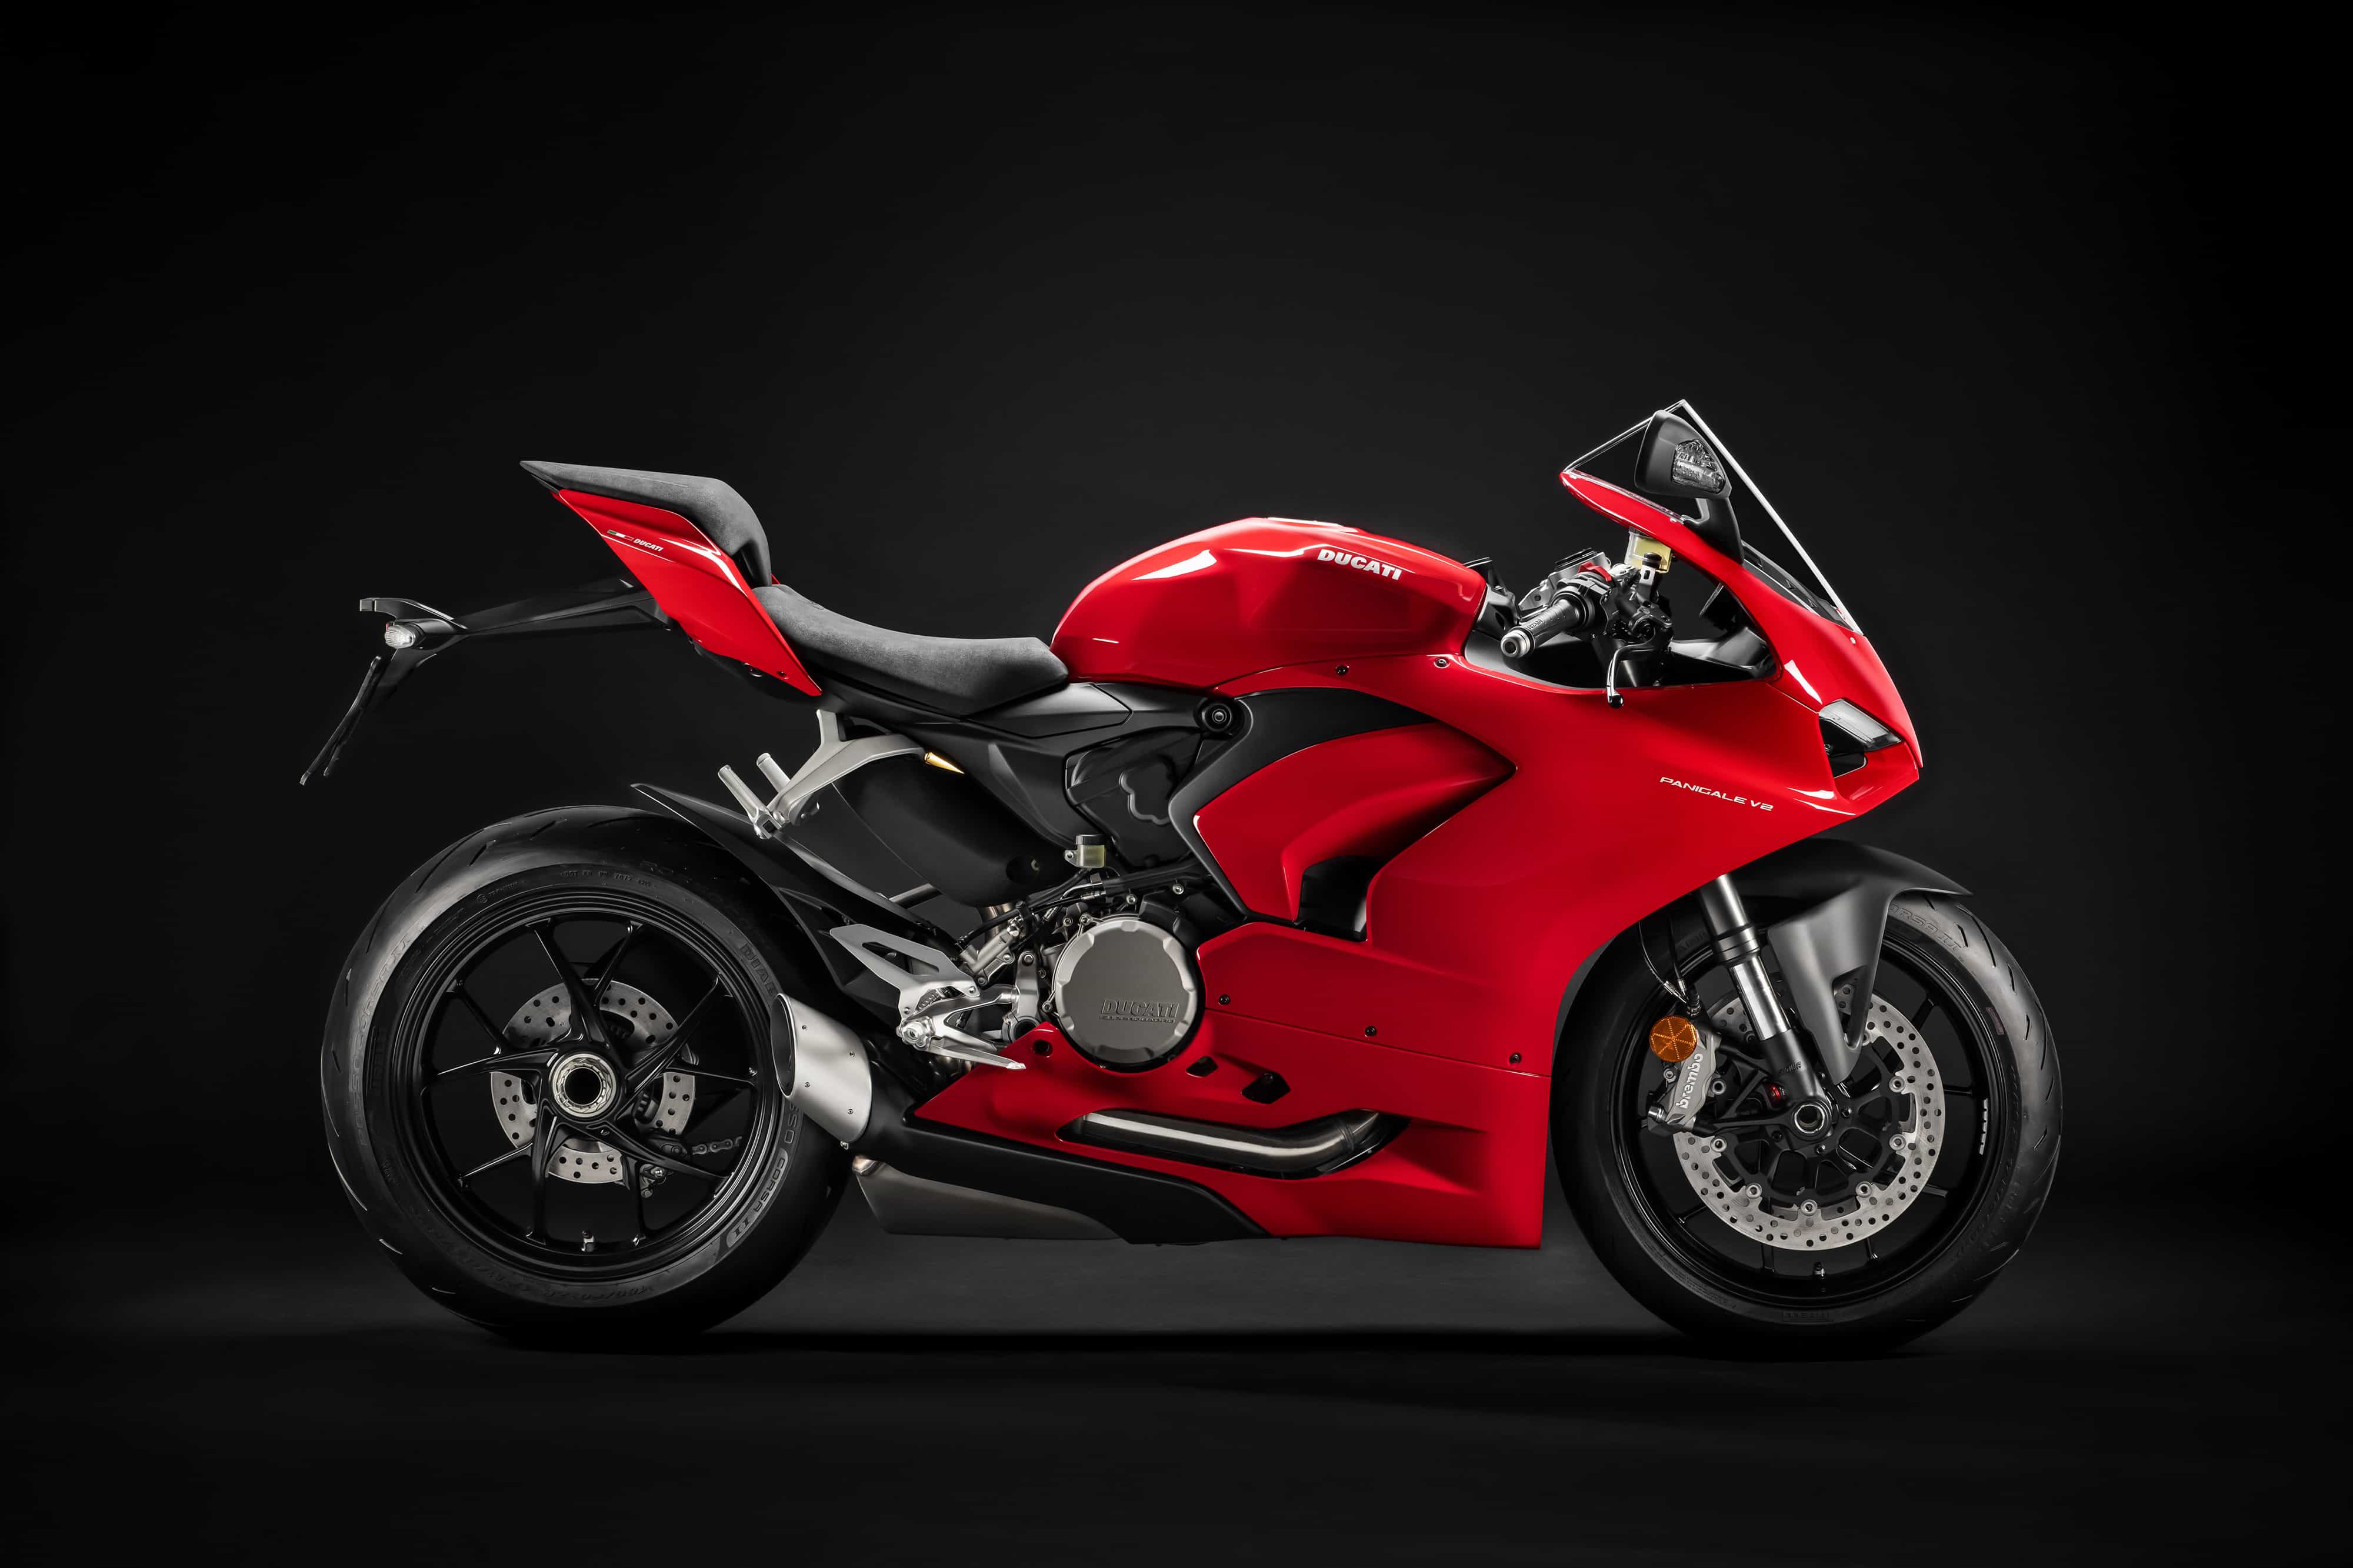 Zastaki.com - Красный мотоцикл Ducati Panigale v2, 2020 года на черном фоне